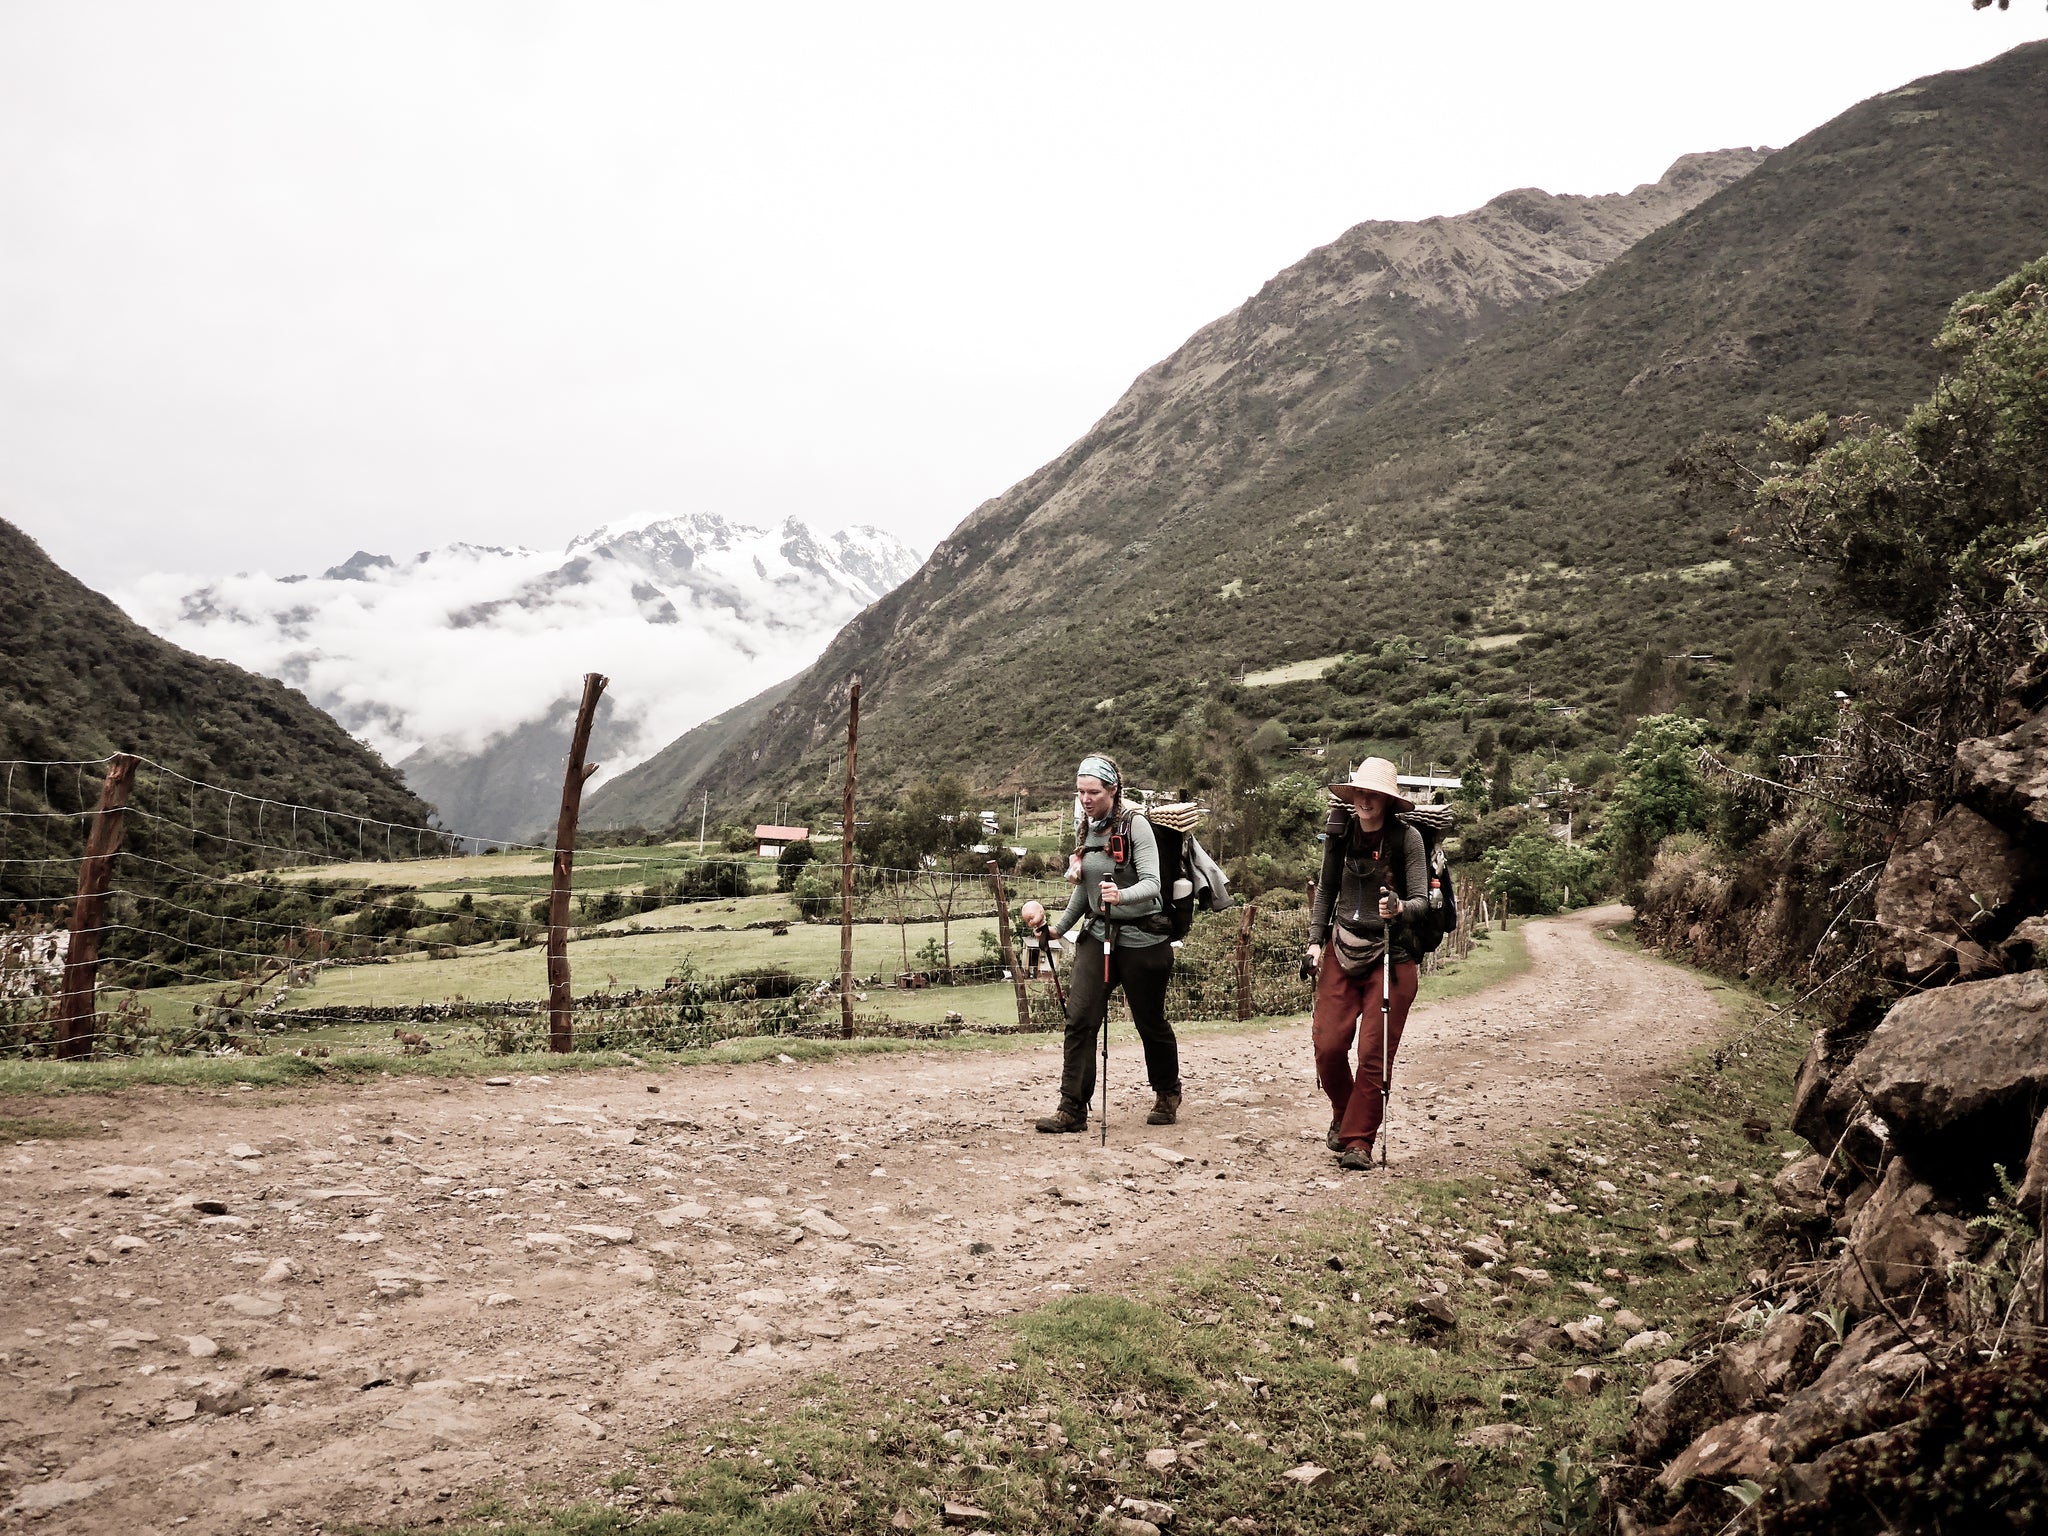 Ultralight backpackers hiking a dirt path in Peru